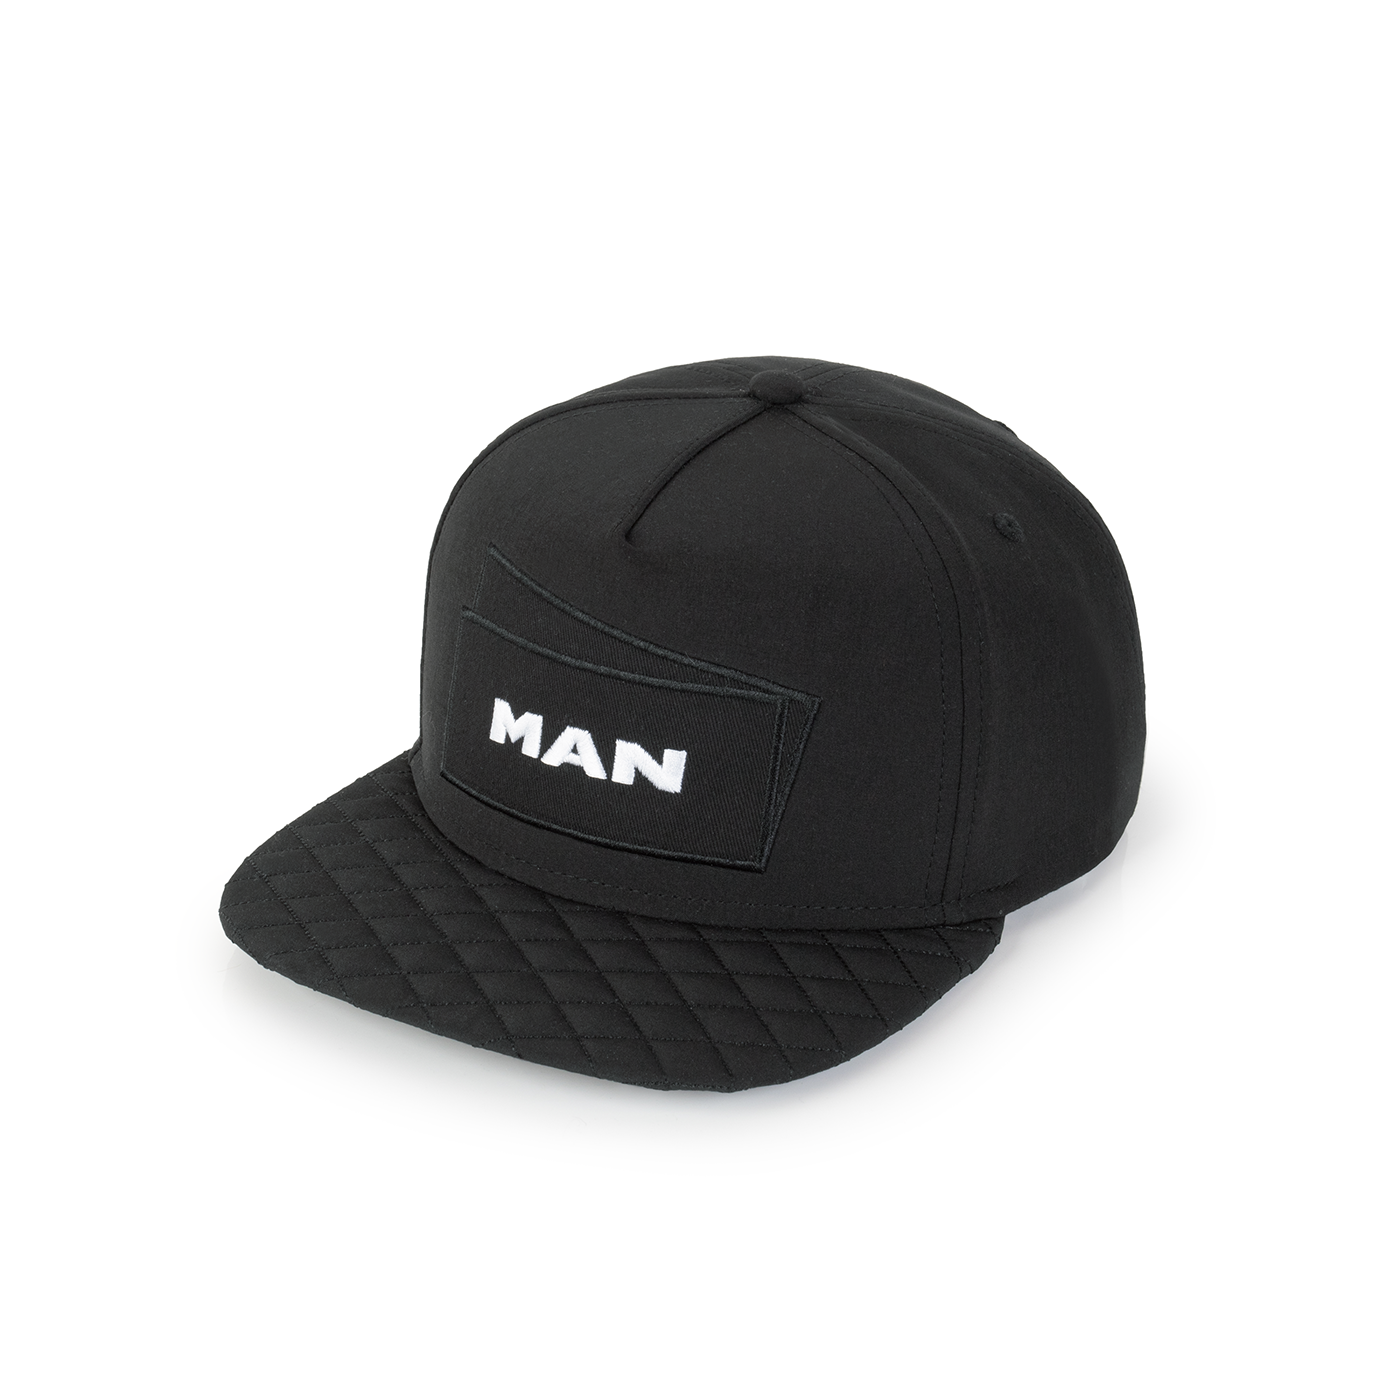 MAN Flat cap, MAN logo